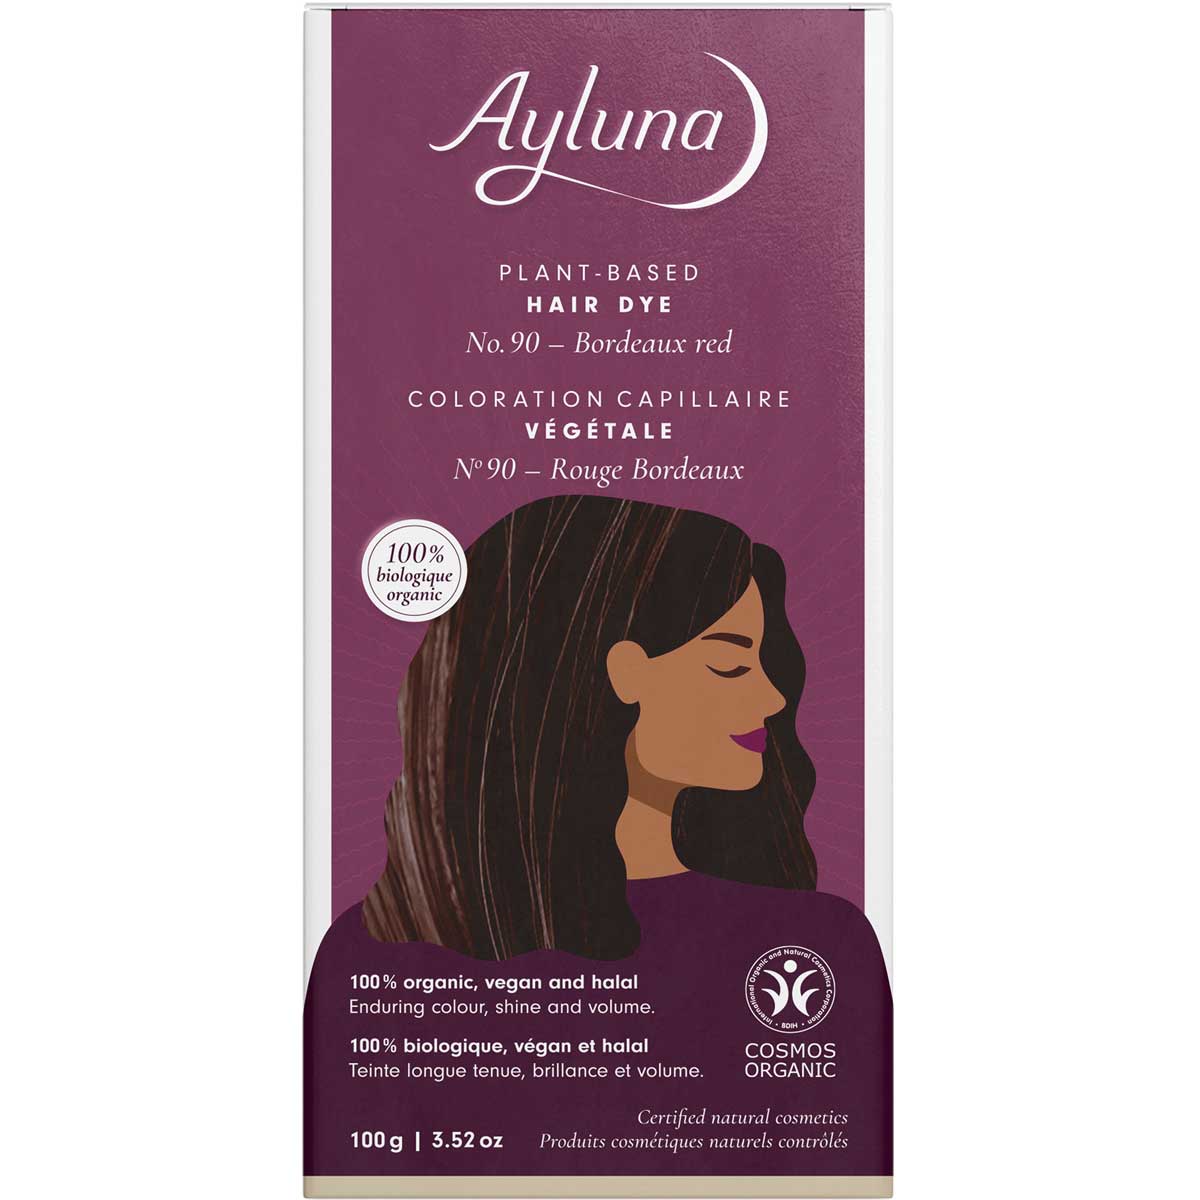 Ayluna Bordeaux Red No.90 Plant-Based Hair Dye 100g